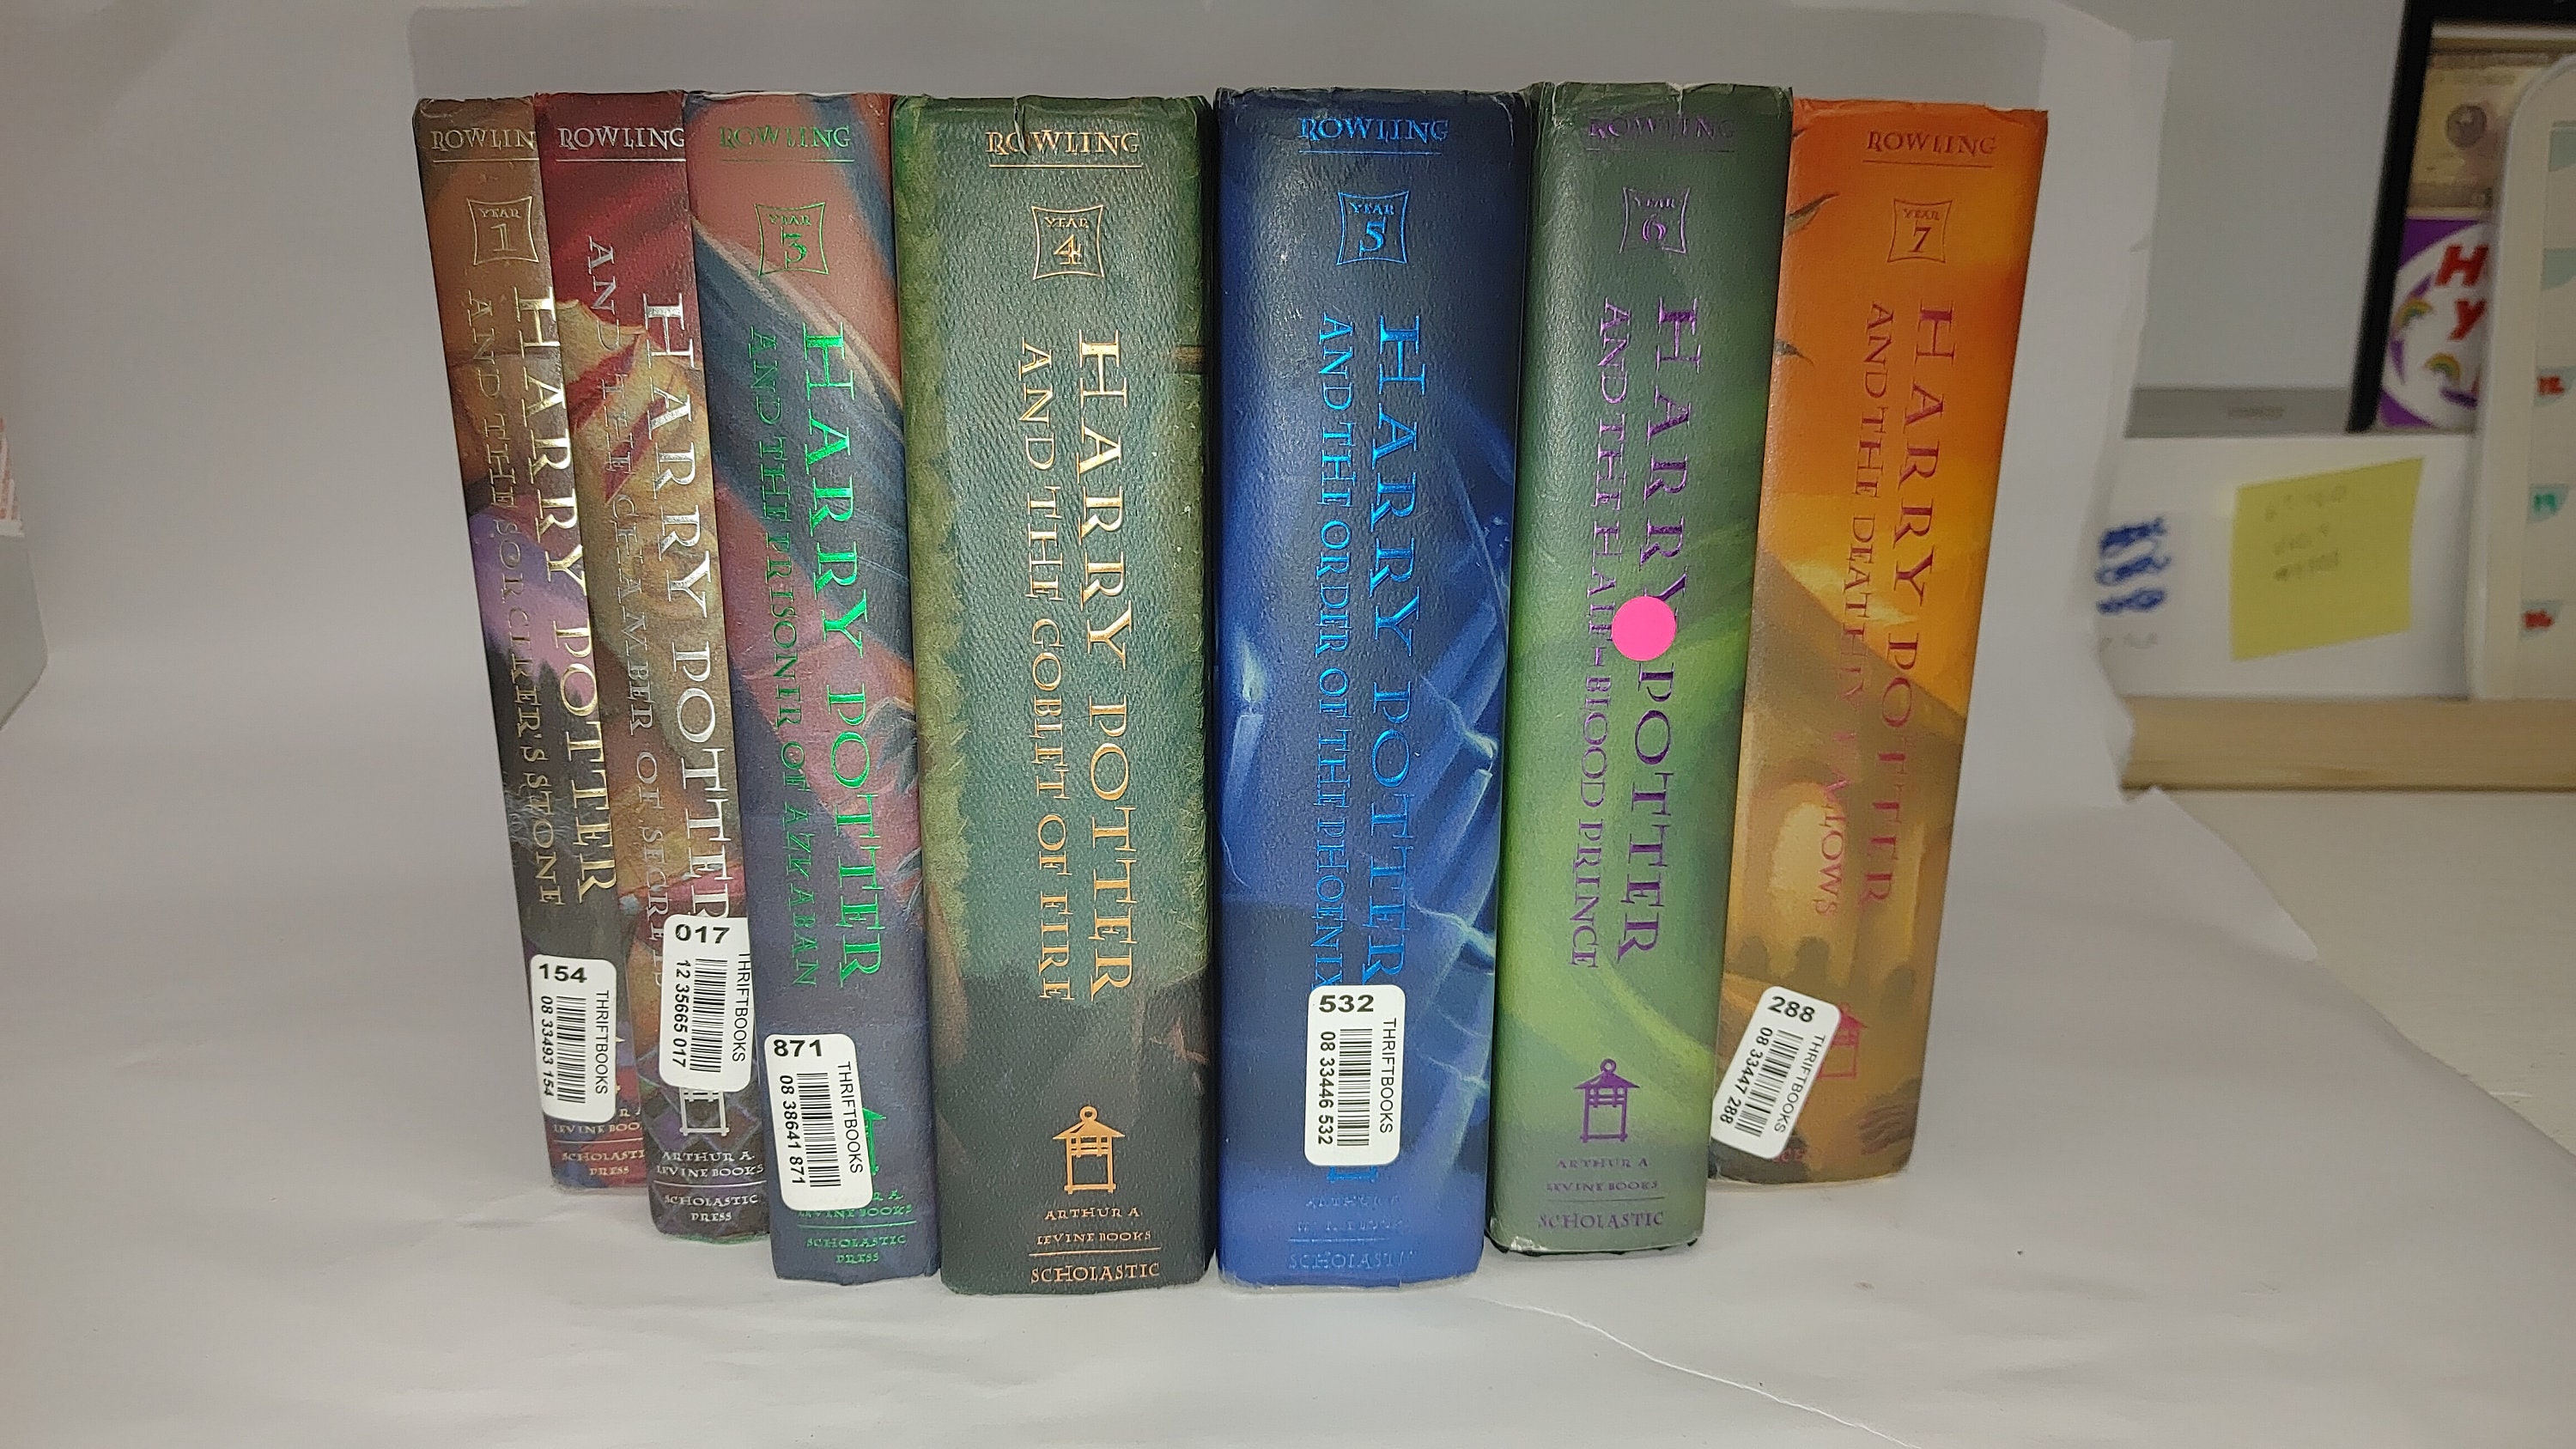 8books) Harry Potter complete books set 1-8books Harry Potter Full